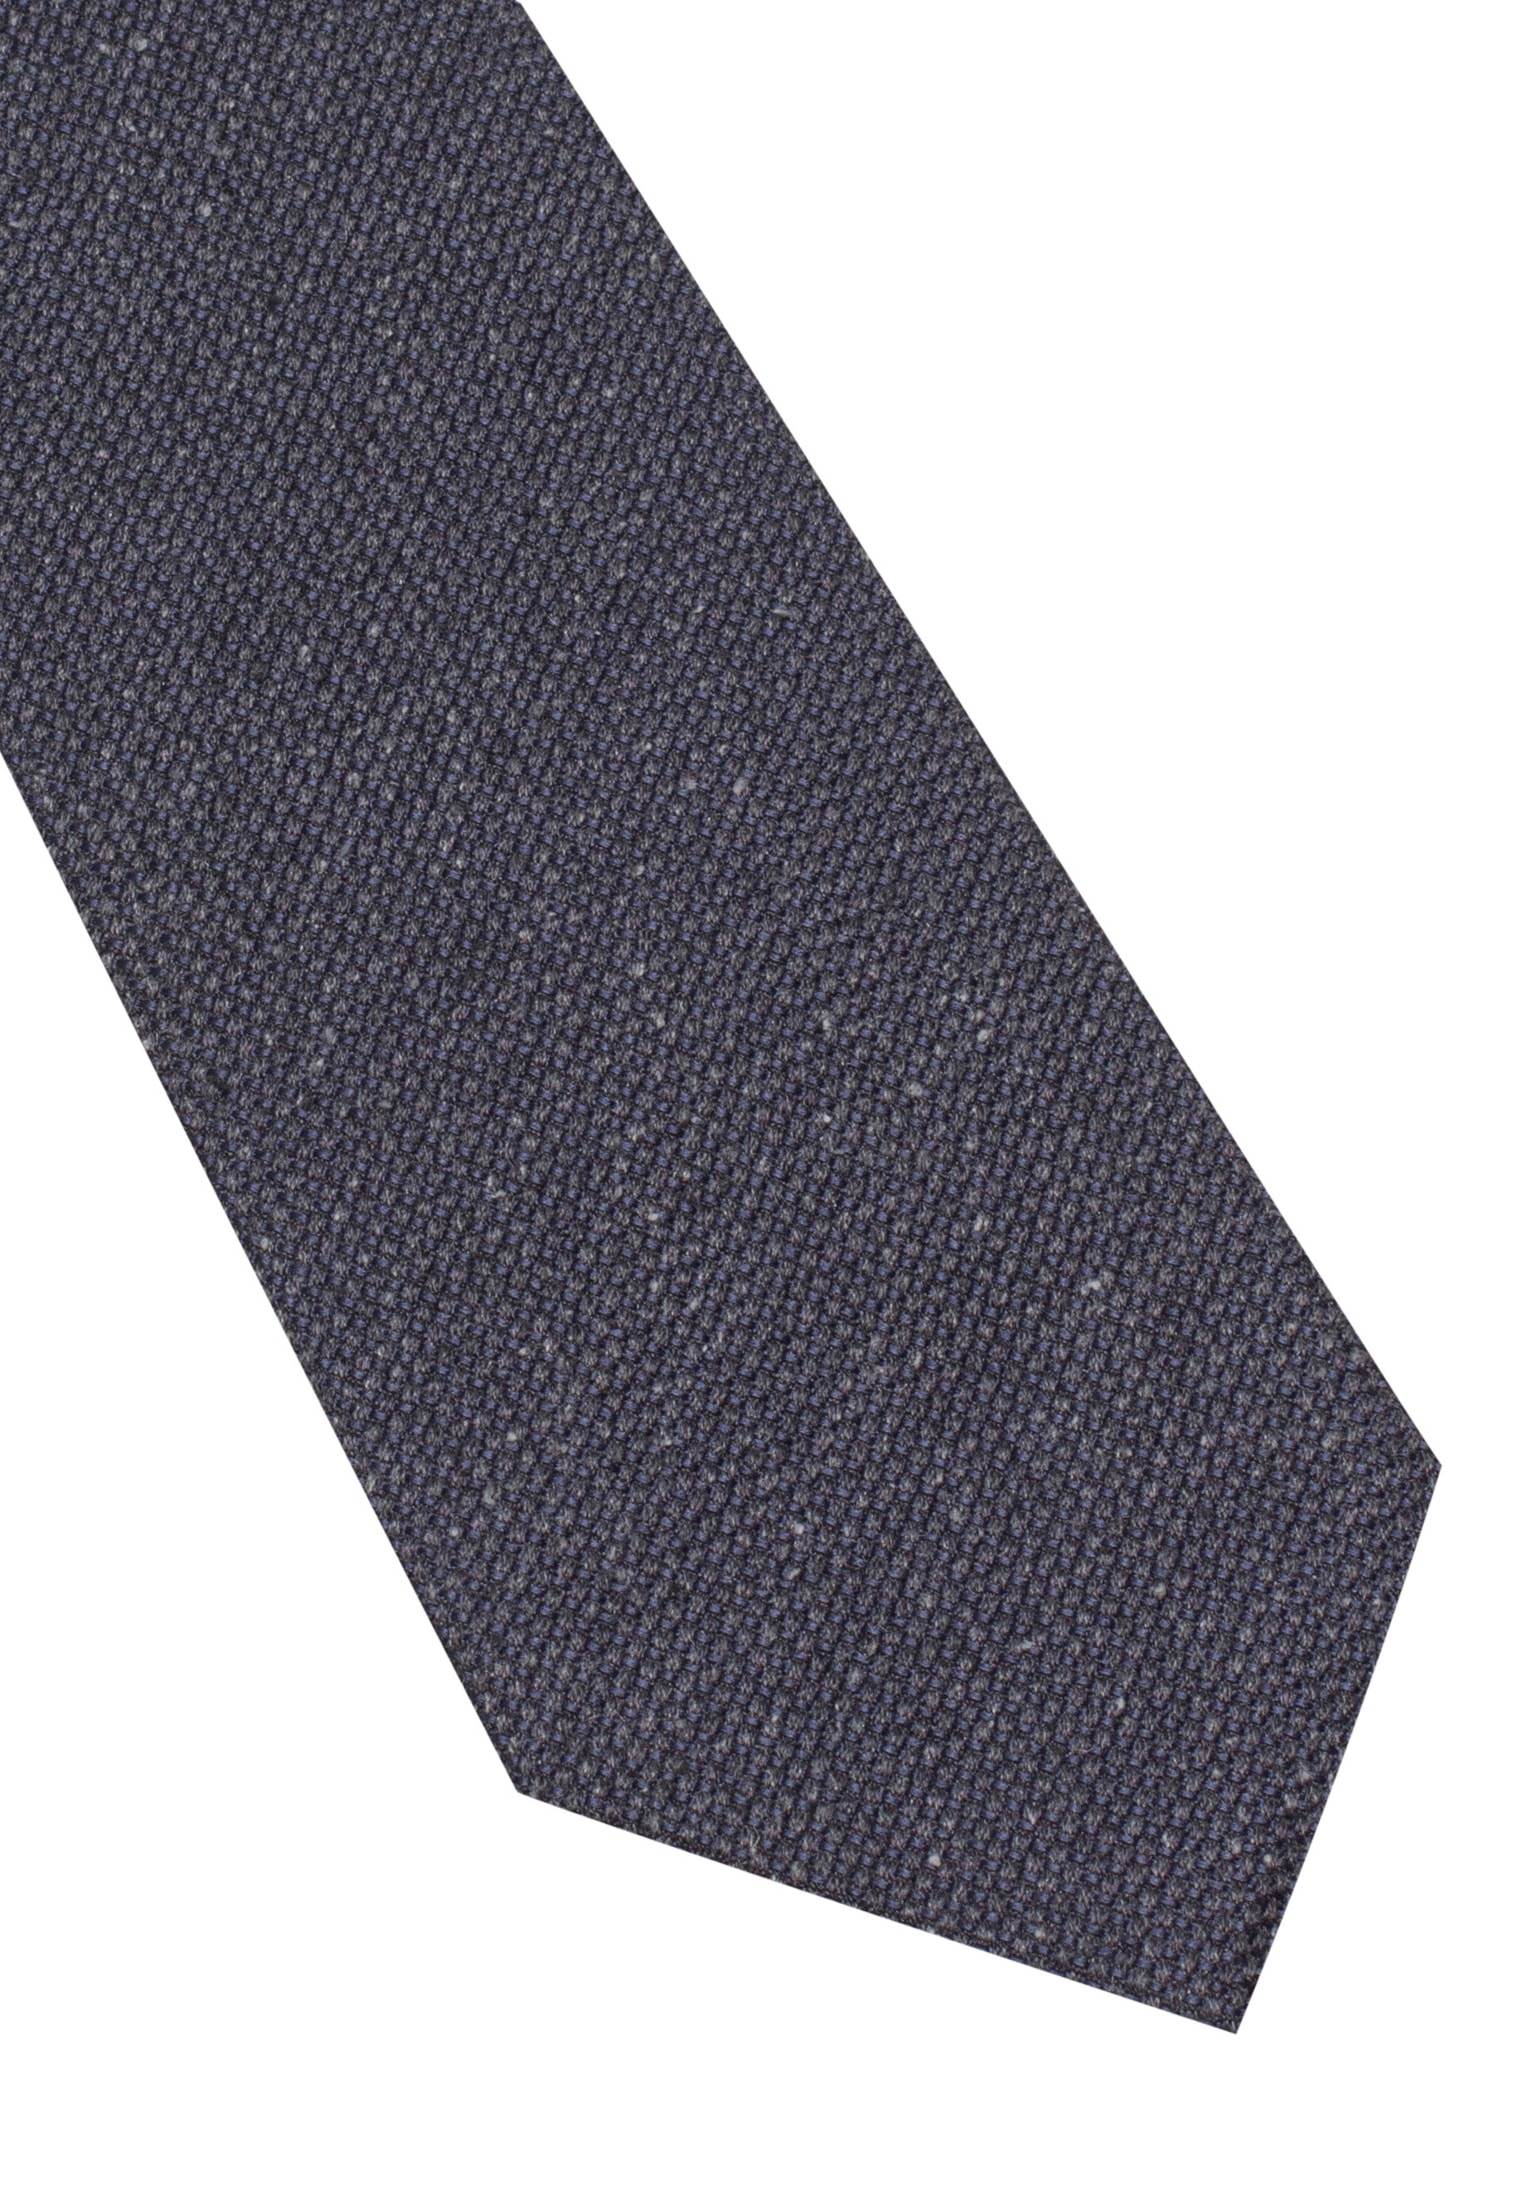 Graue Krawatten kaufen ▷ Hellgrau & Dunkelgrau | BAUR